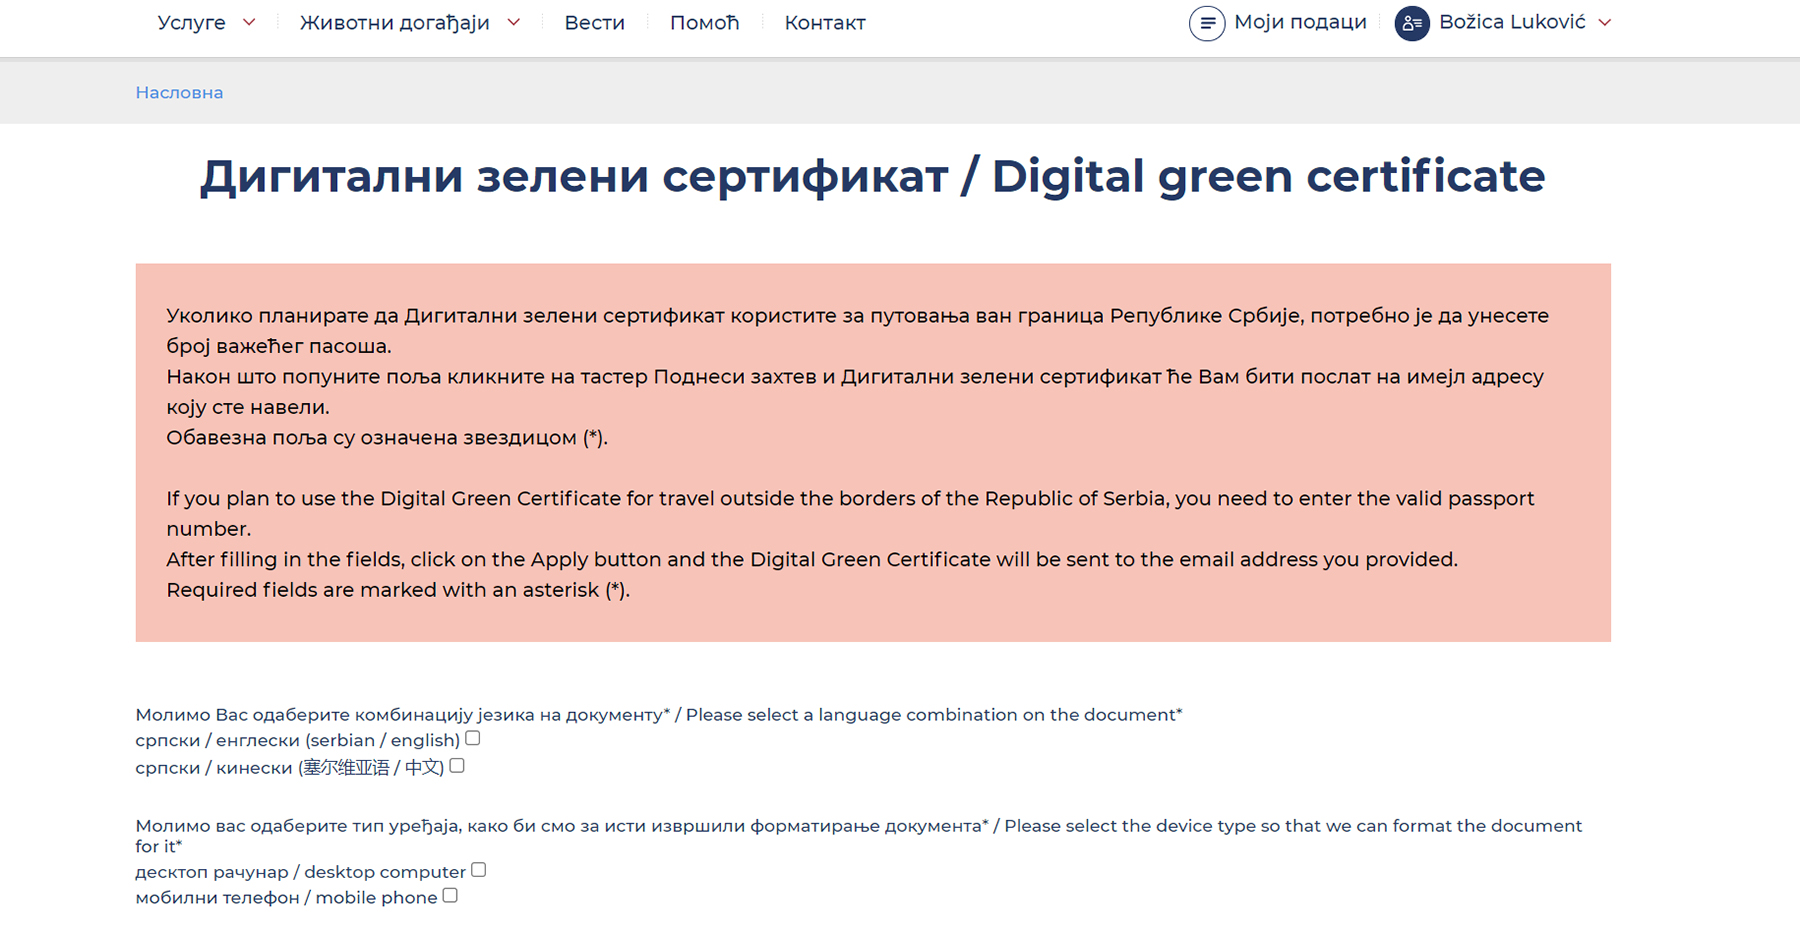 prijava za digitalni zeleni sertifikat